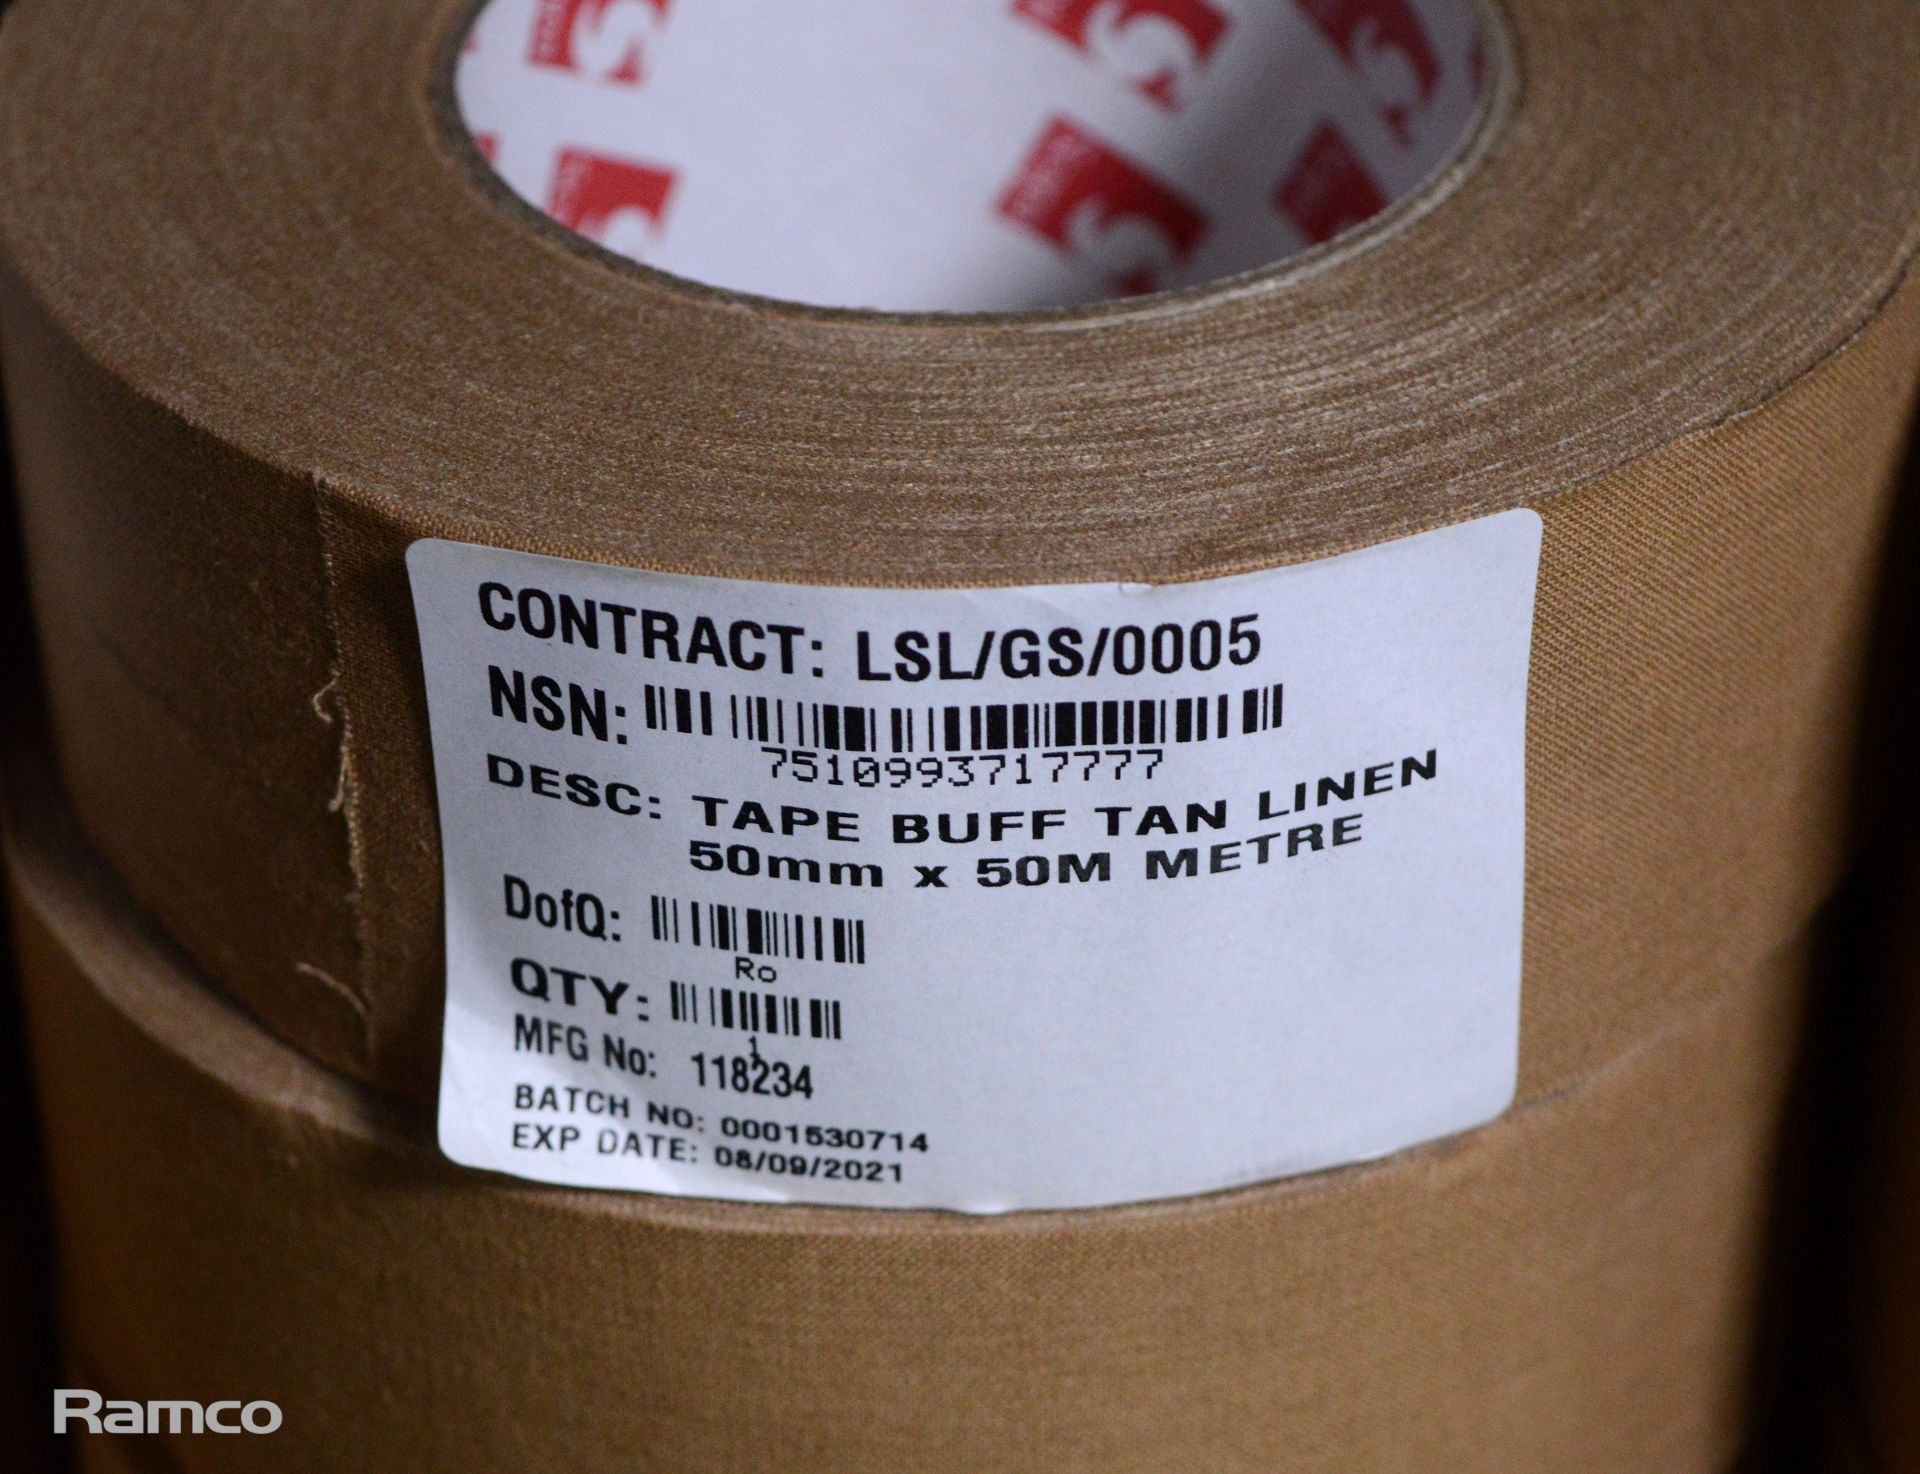 Scapa Buff Tan Linen Tape 50mm x 50m - 75 rolls - Image 3 of 3